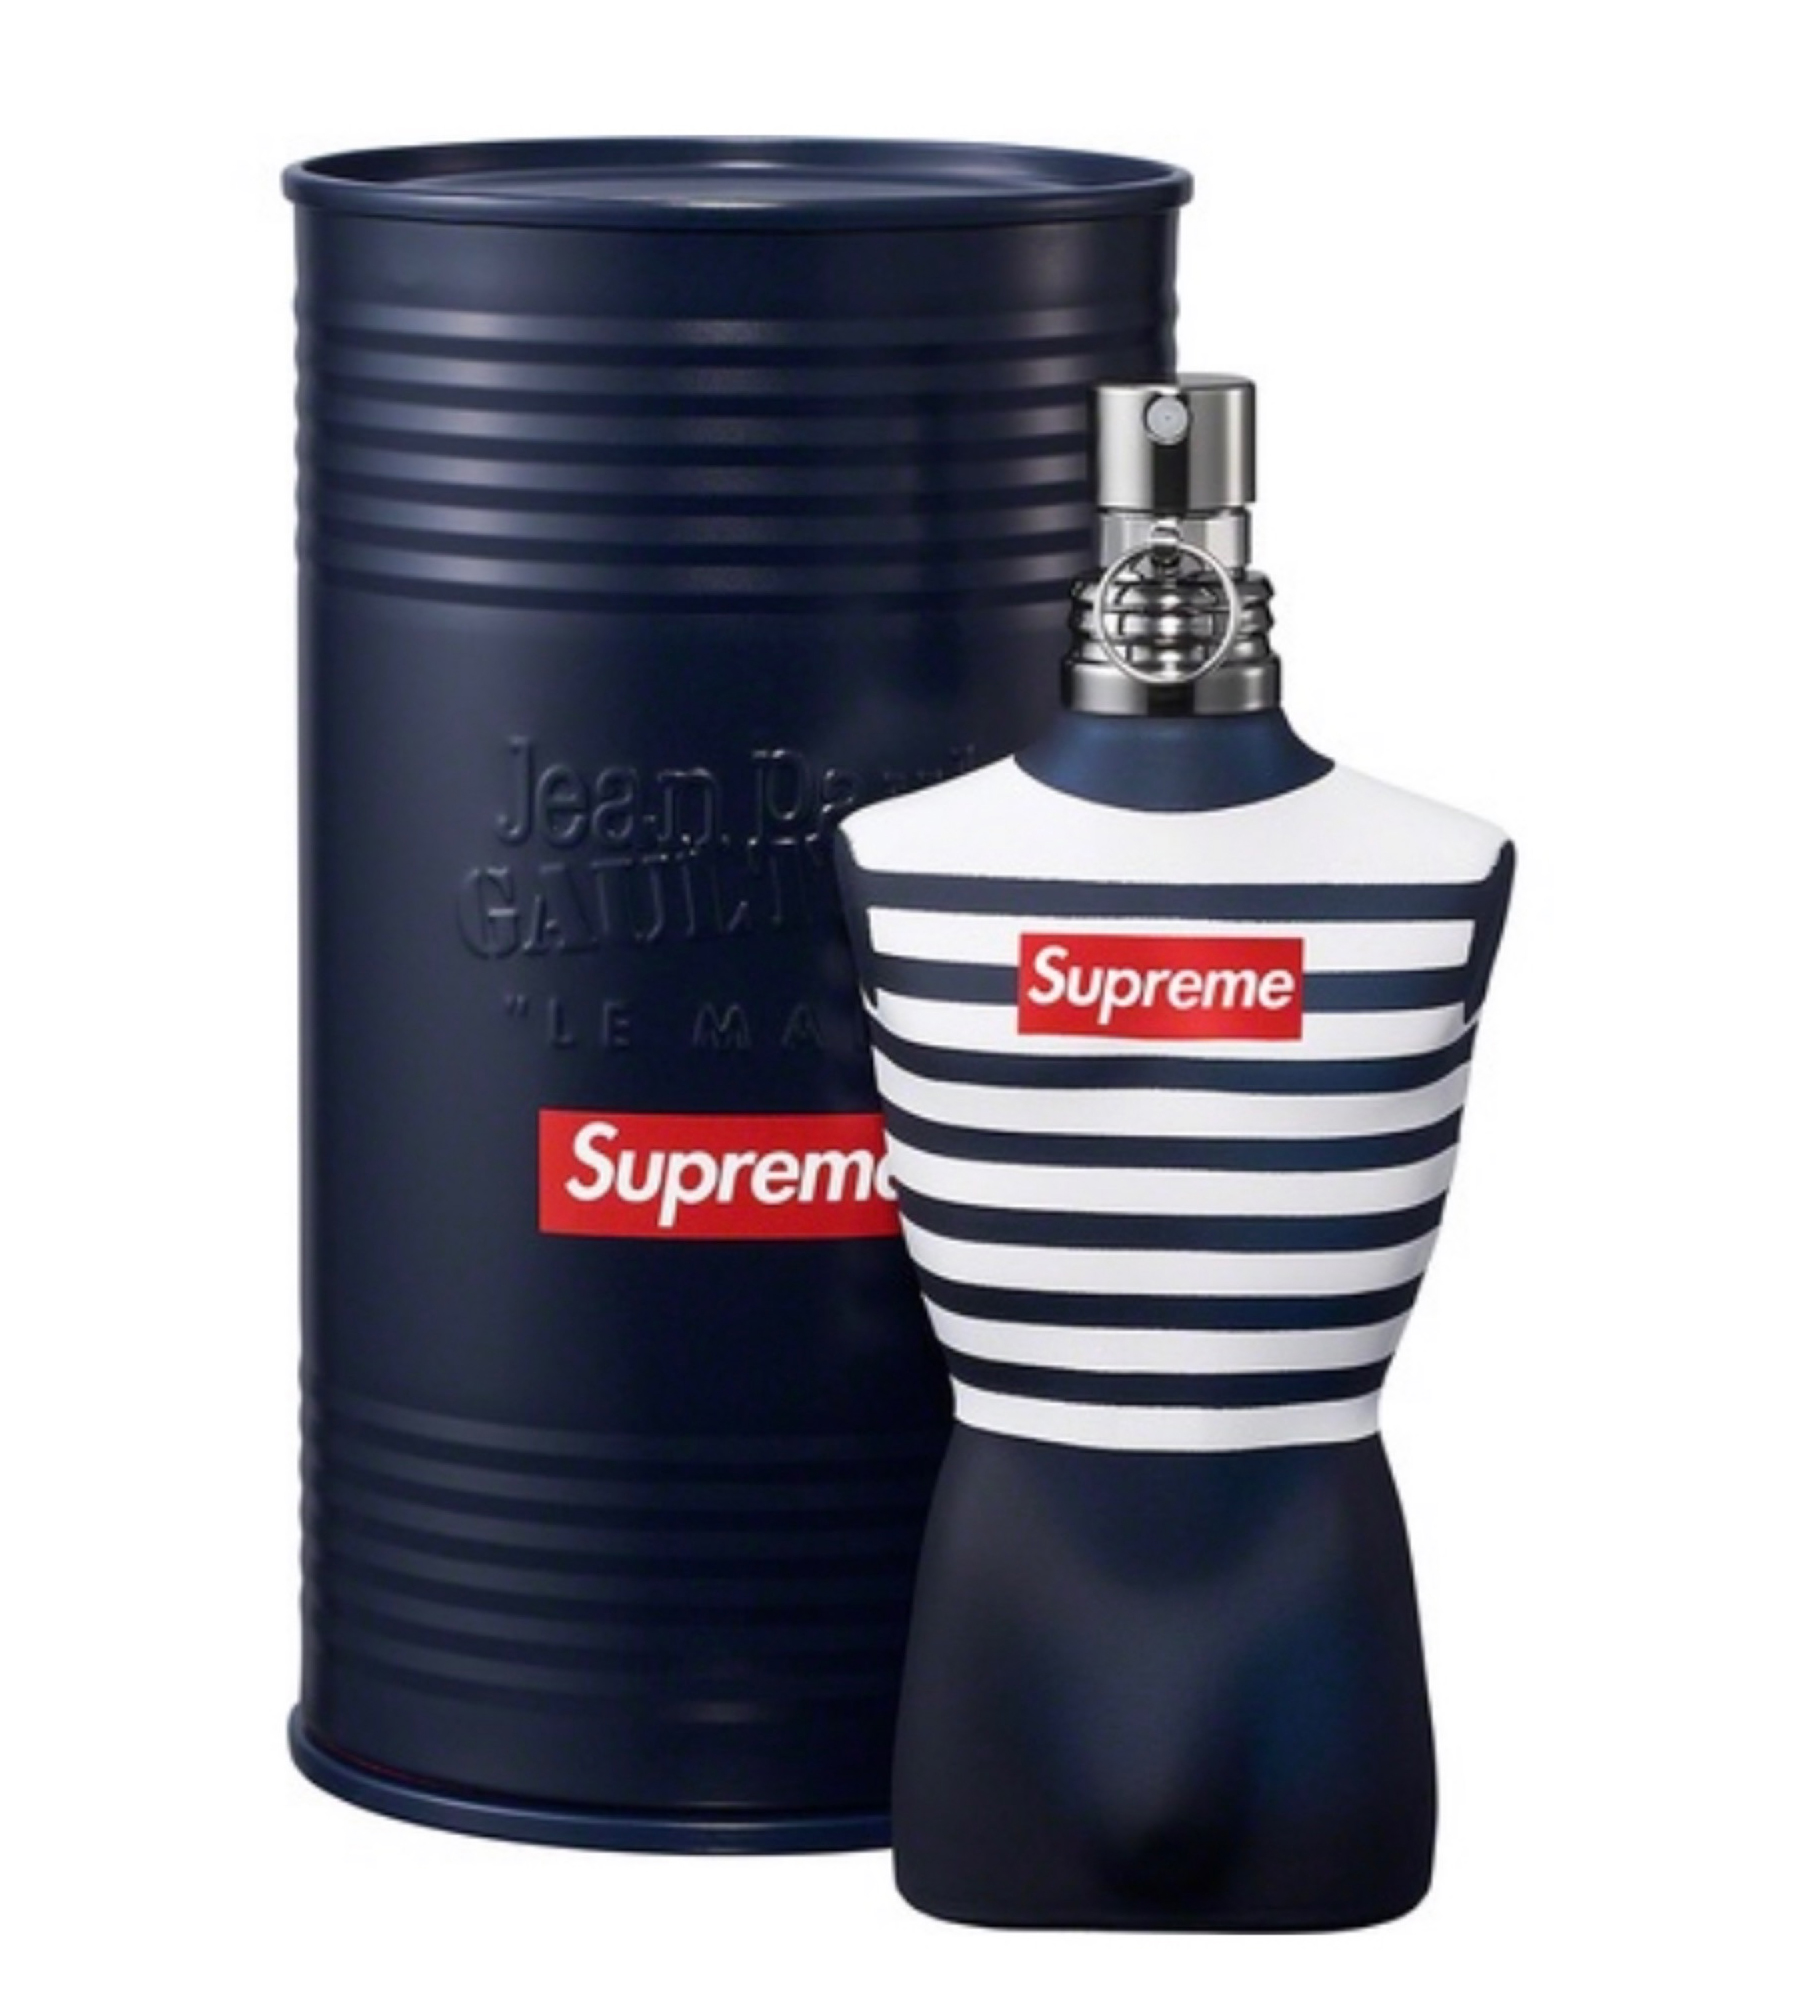 Le Male Supreme Edition Jean Paul Gaultier cologne a fragrance for